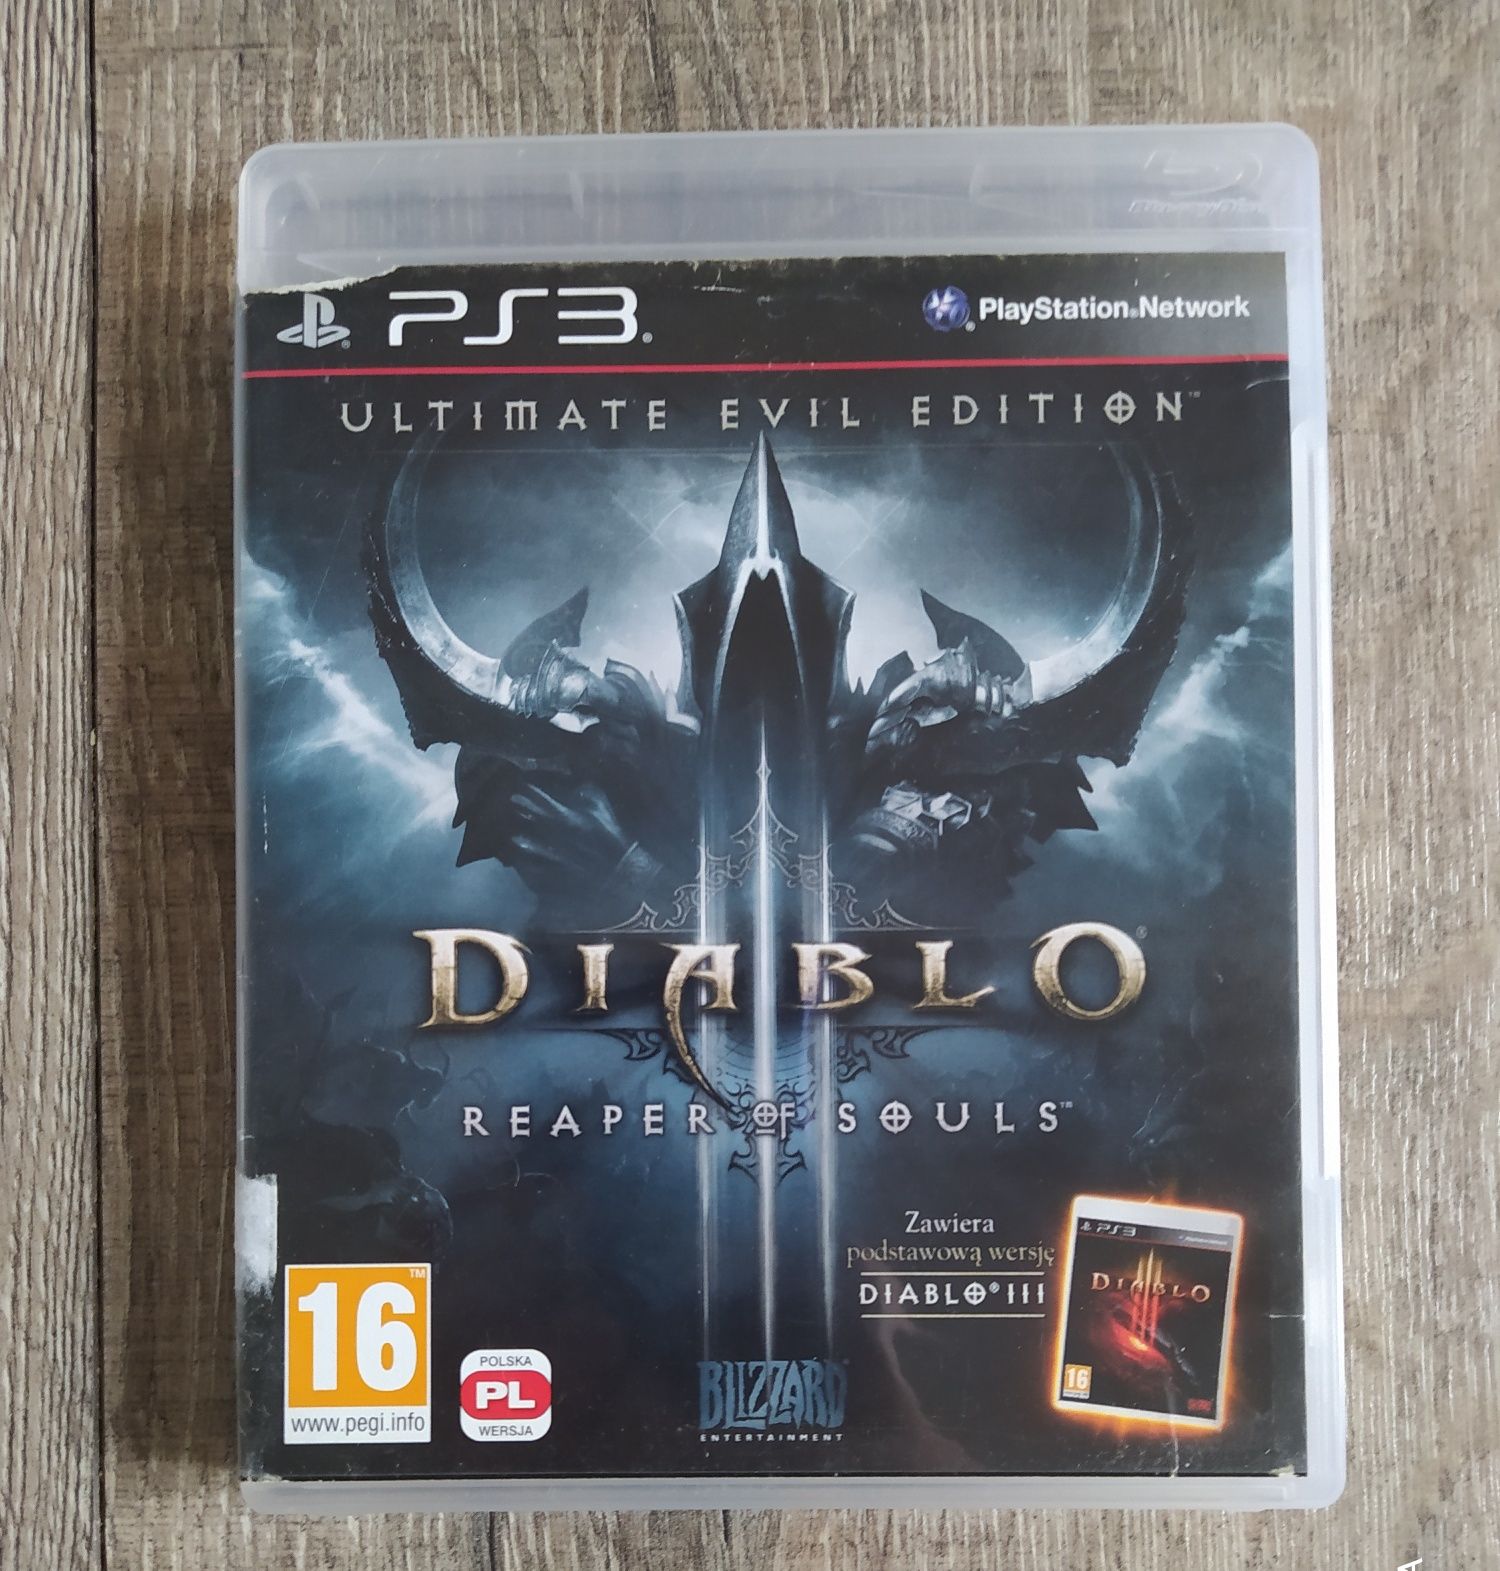 Gra PS3 Diablo III + Dodatek Wysyłka Elbląg • OLX.pl